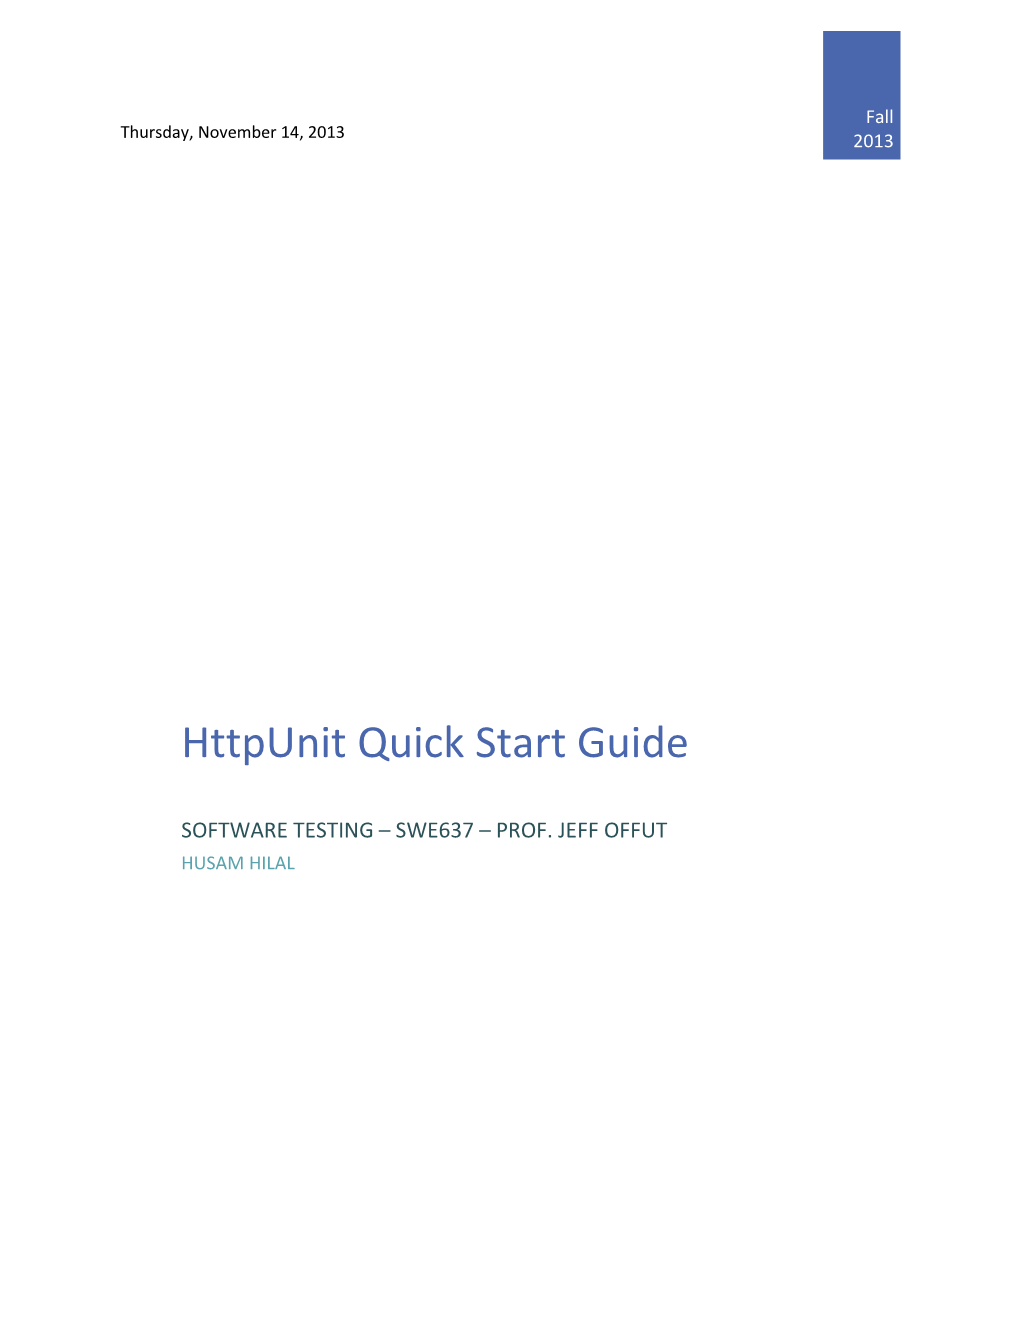 Httpunit Quick Start Guide